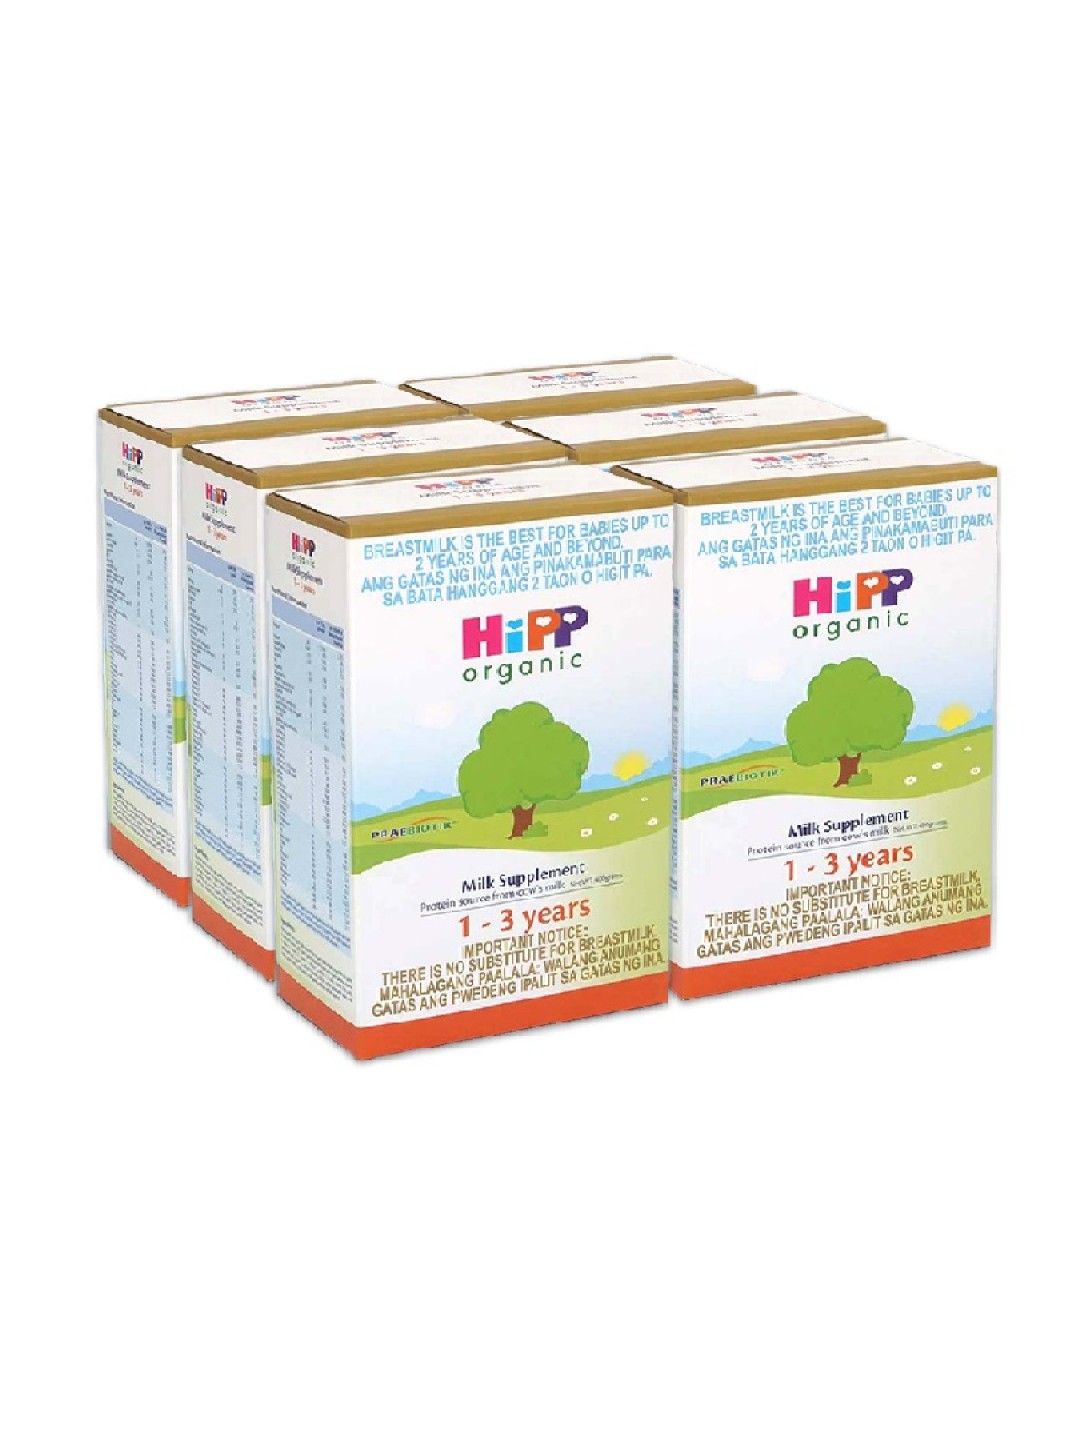 HiPP Organic Bag-in-Boxes Milk Supplement 1-3 Years (400g x 6)